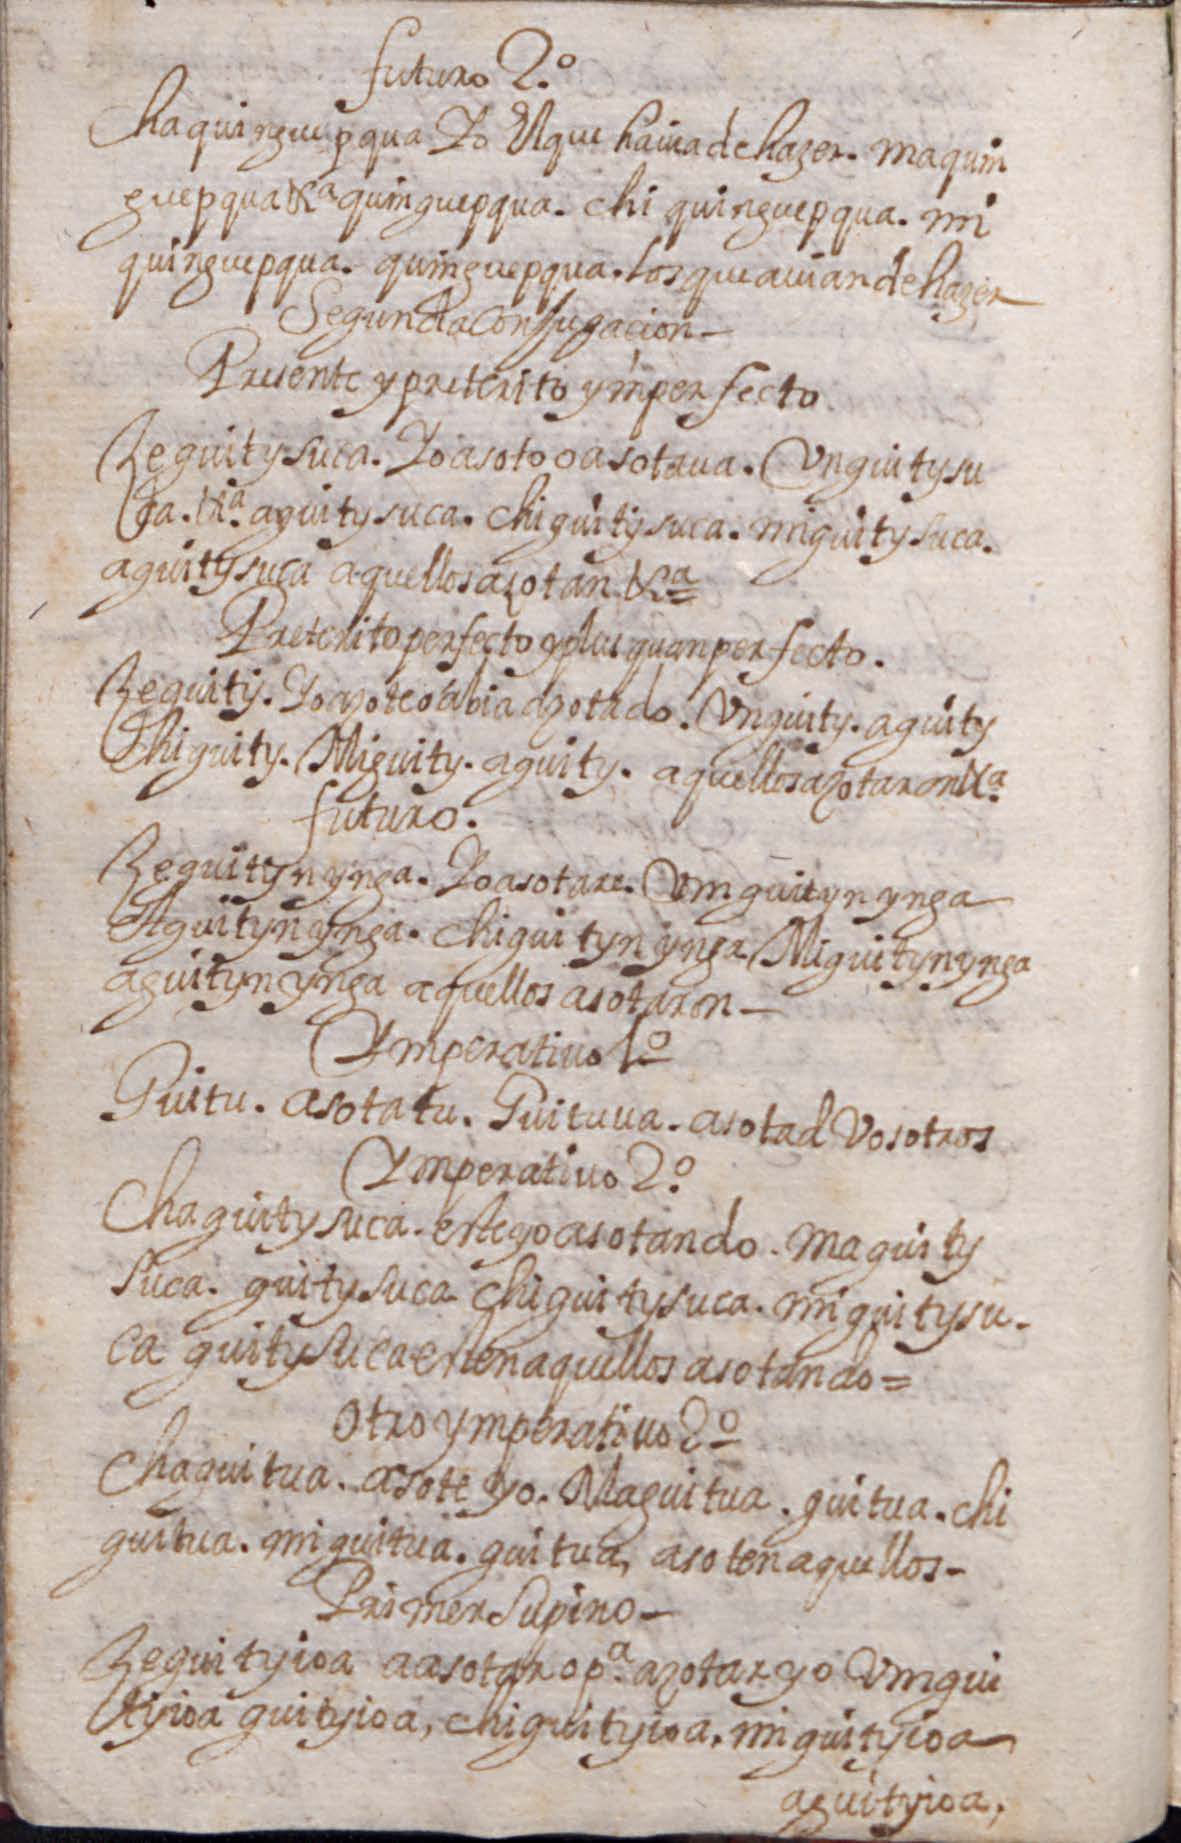 Manuscrito 158 BNC Gramatica - fol 6v.jpg